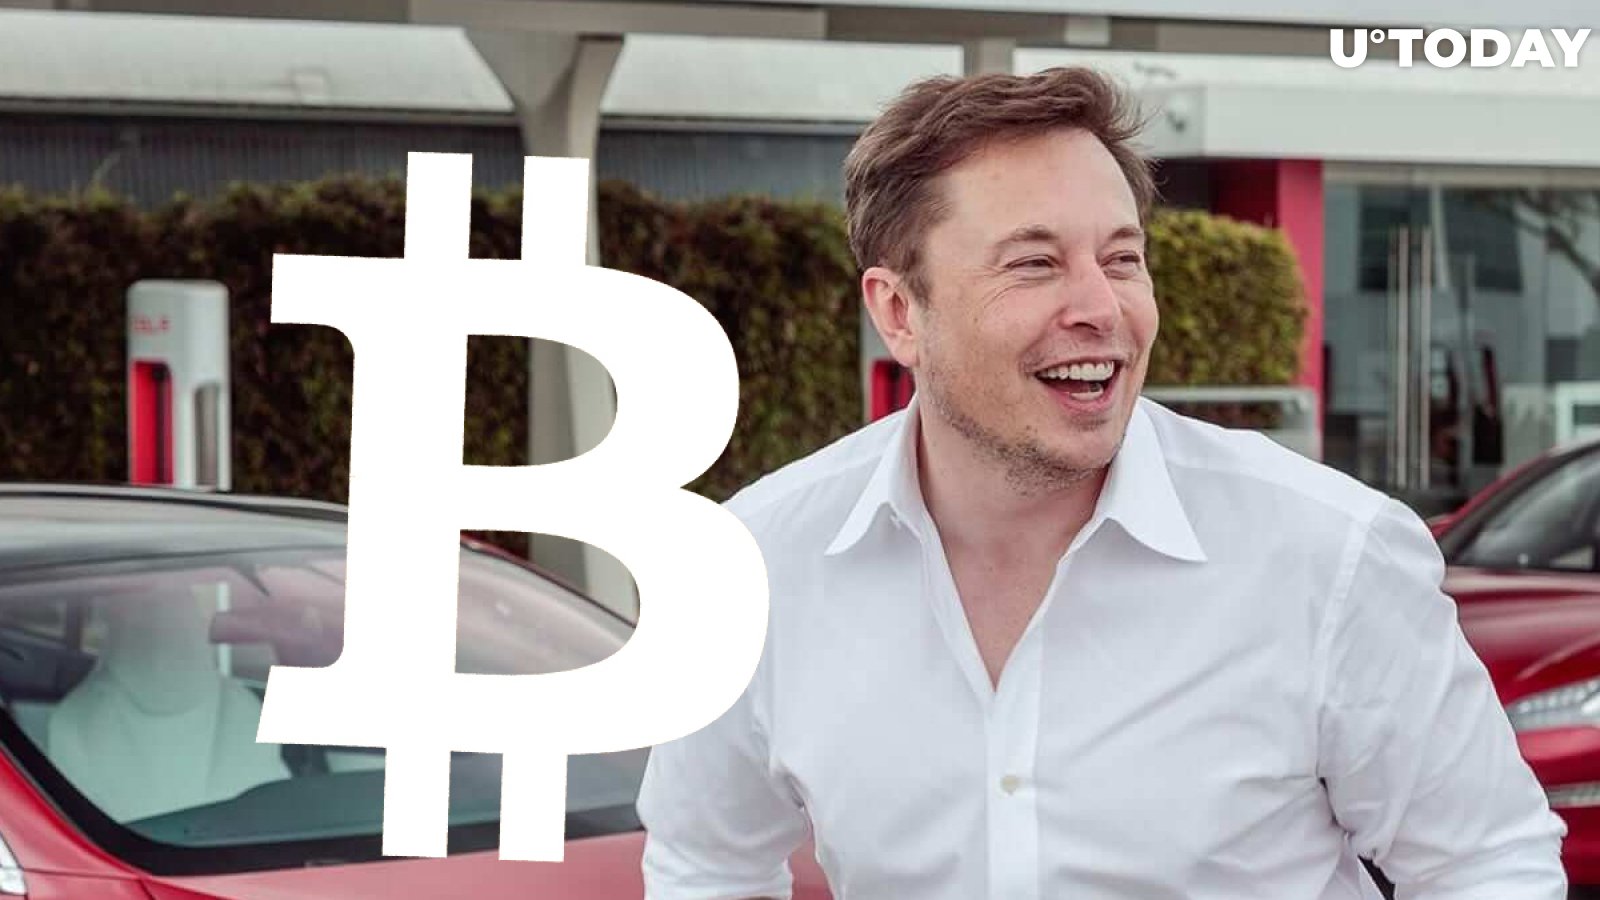 Elon Musk Shares His Recent Take on Bitcoin